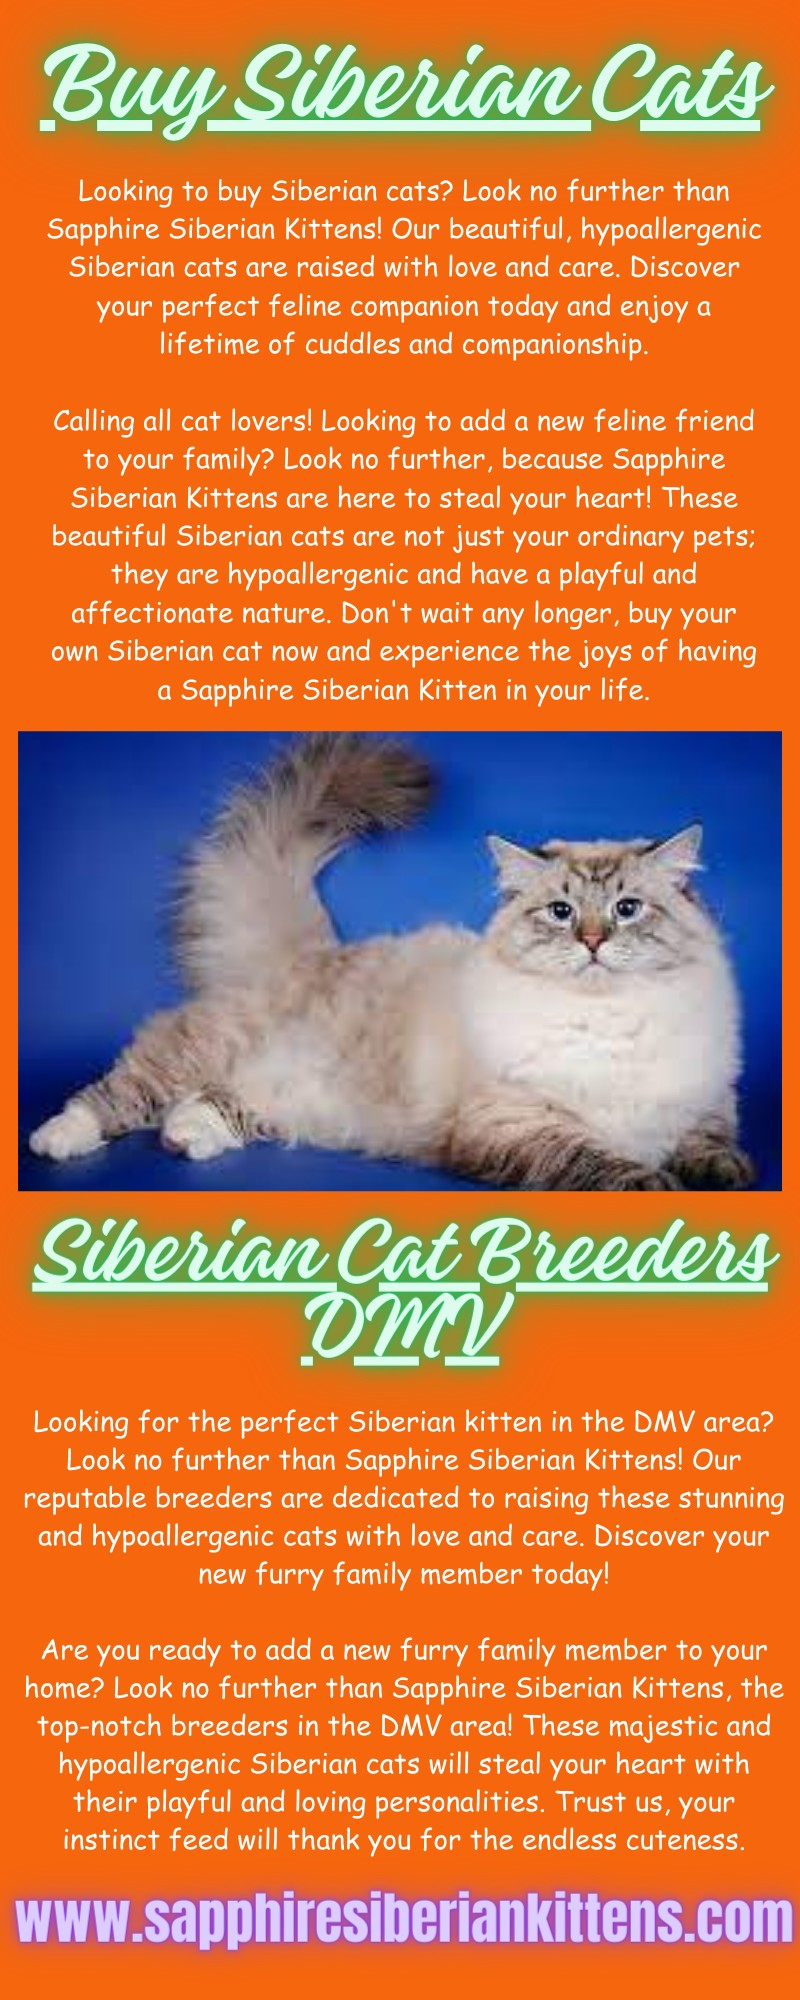 Siberian Cat Breeders DMV